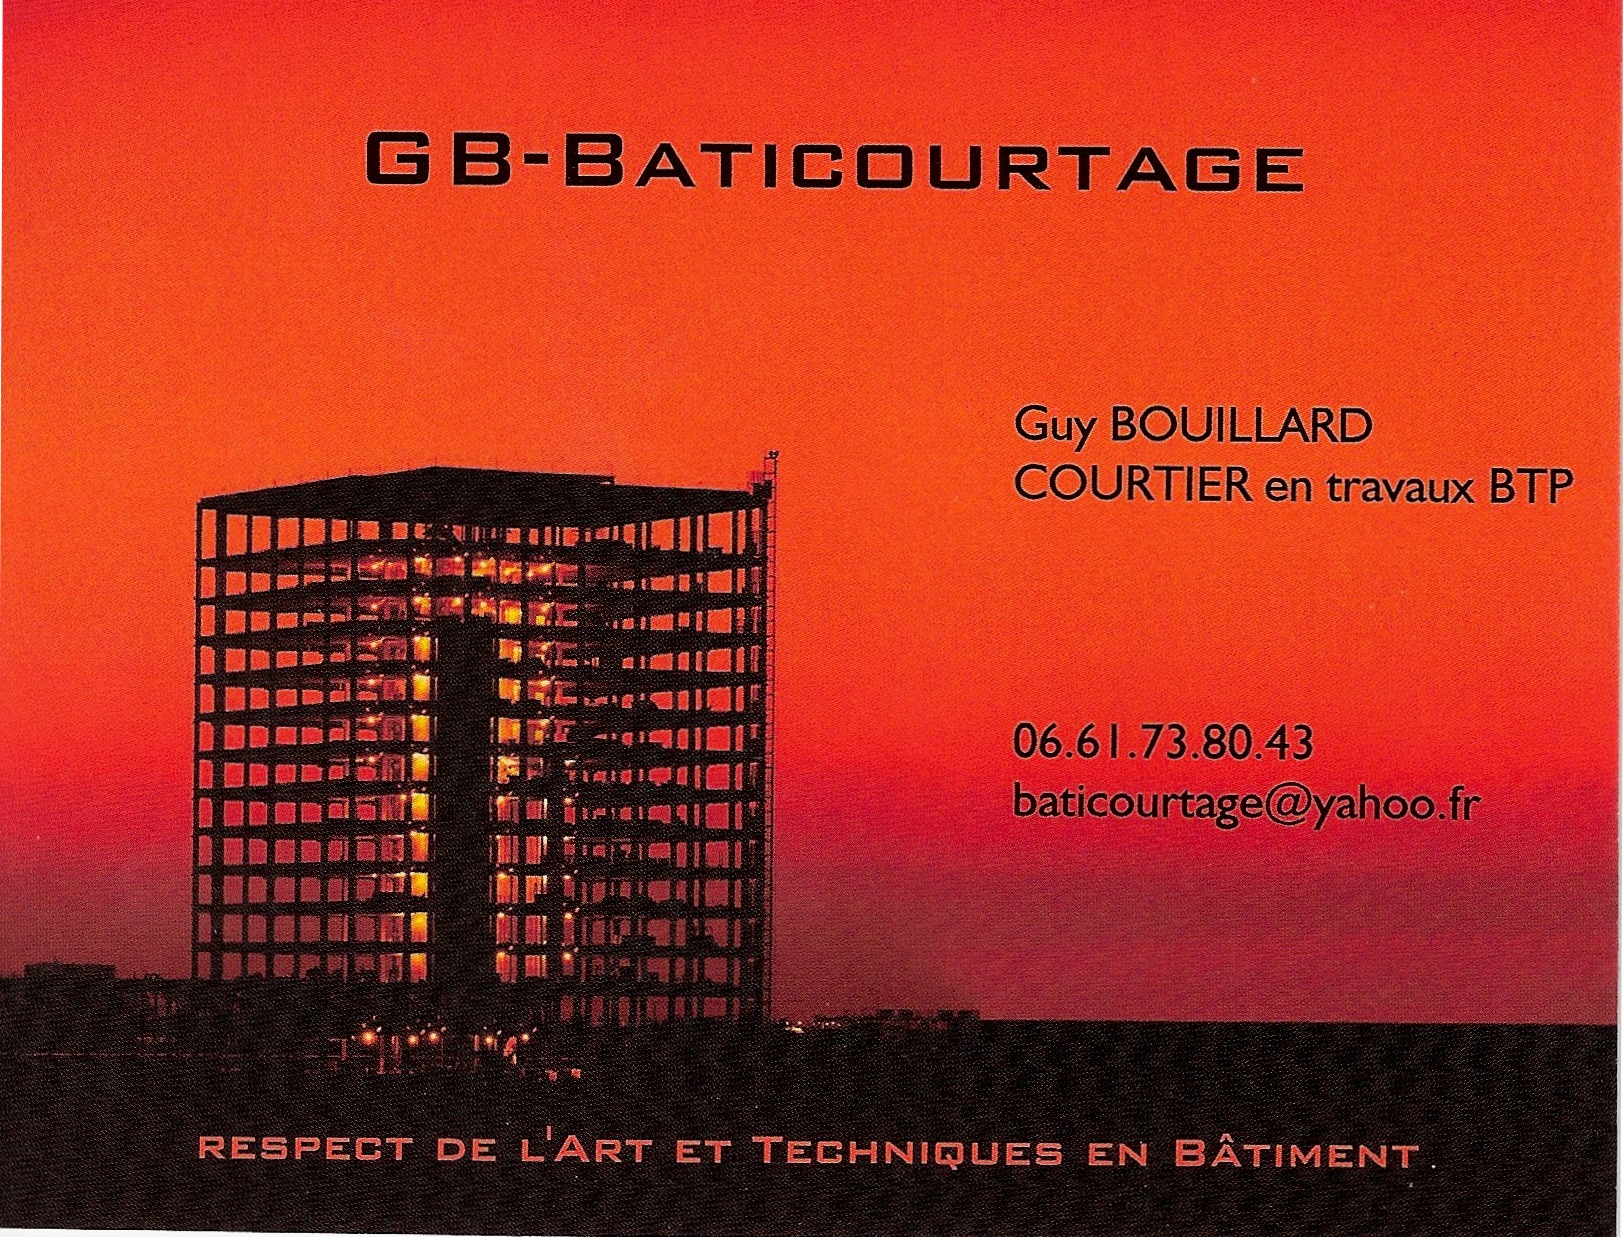 Société GB-Baticourtage